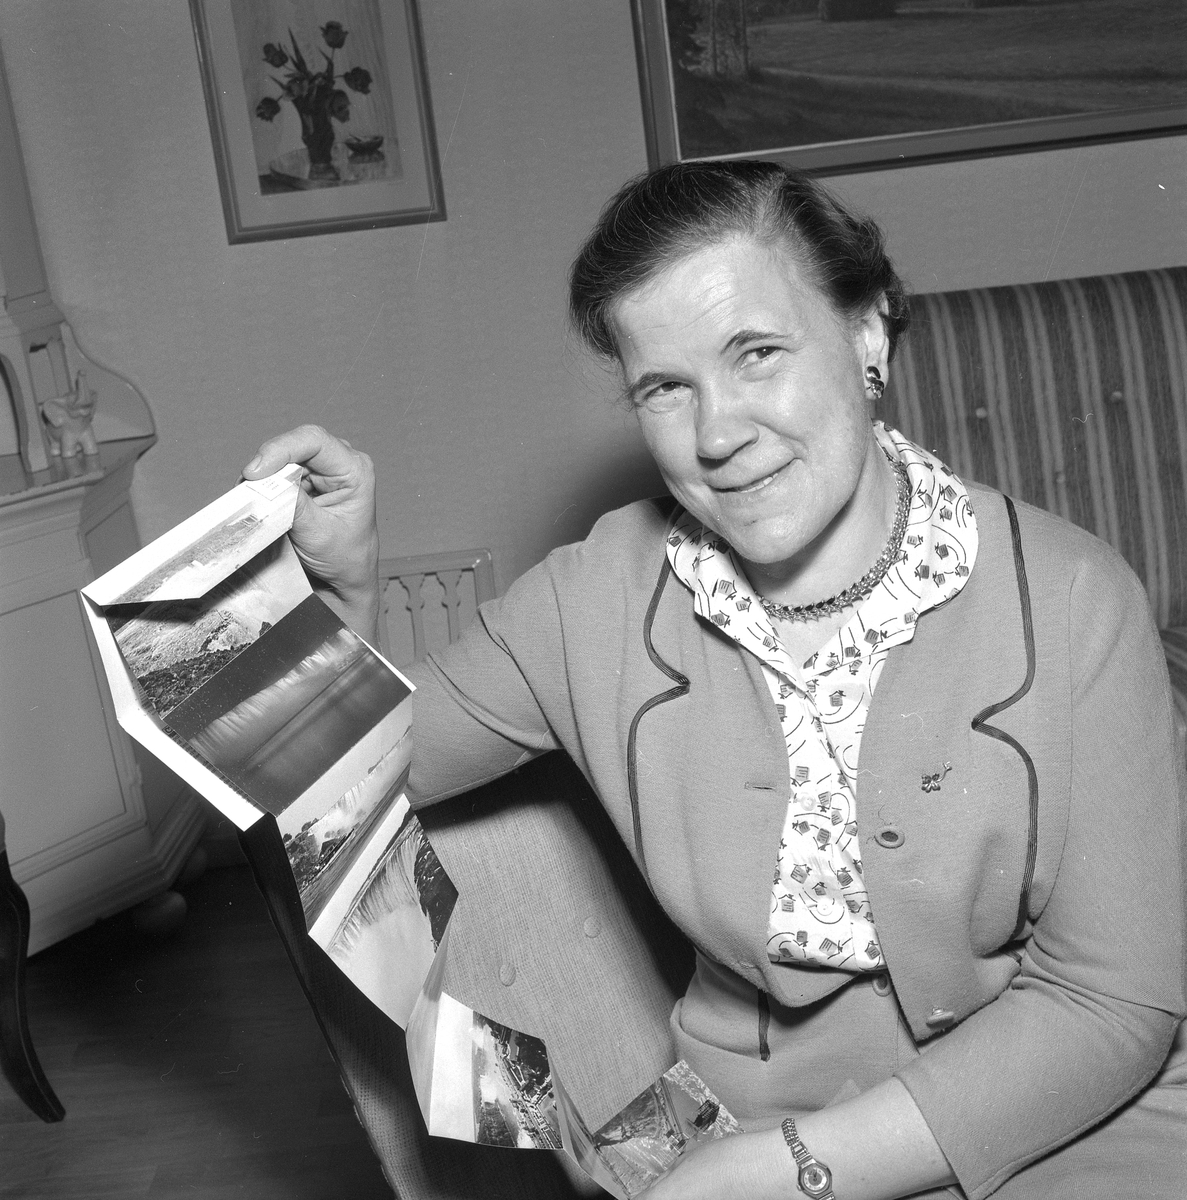 Amerikafarare fru Littorin.
November 1956.